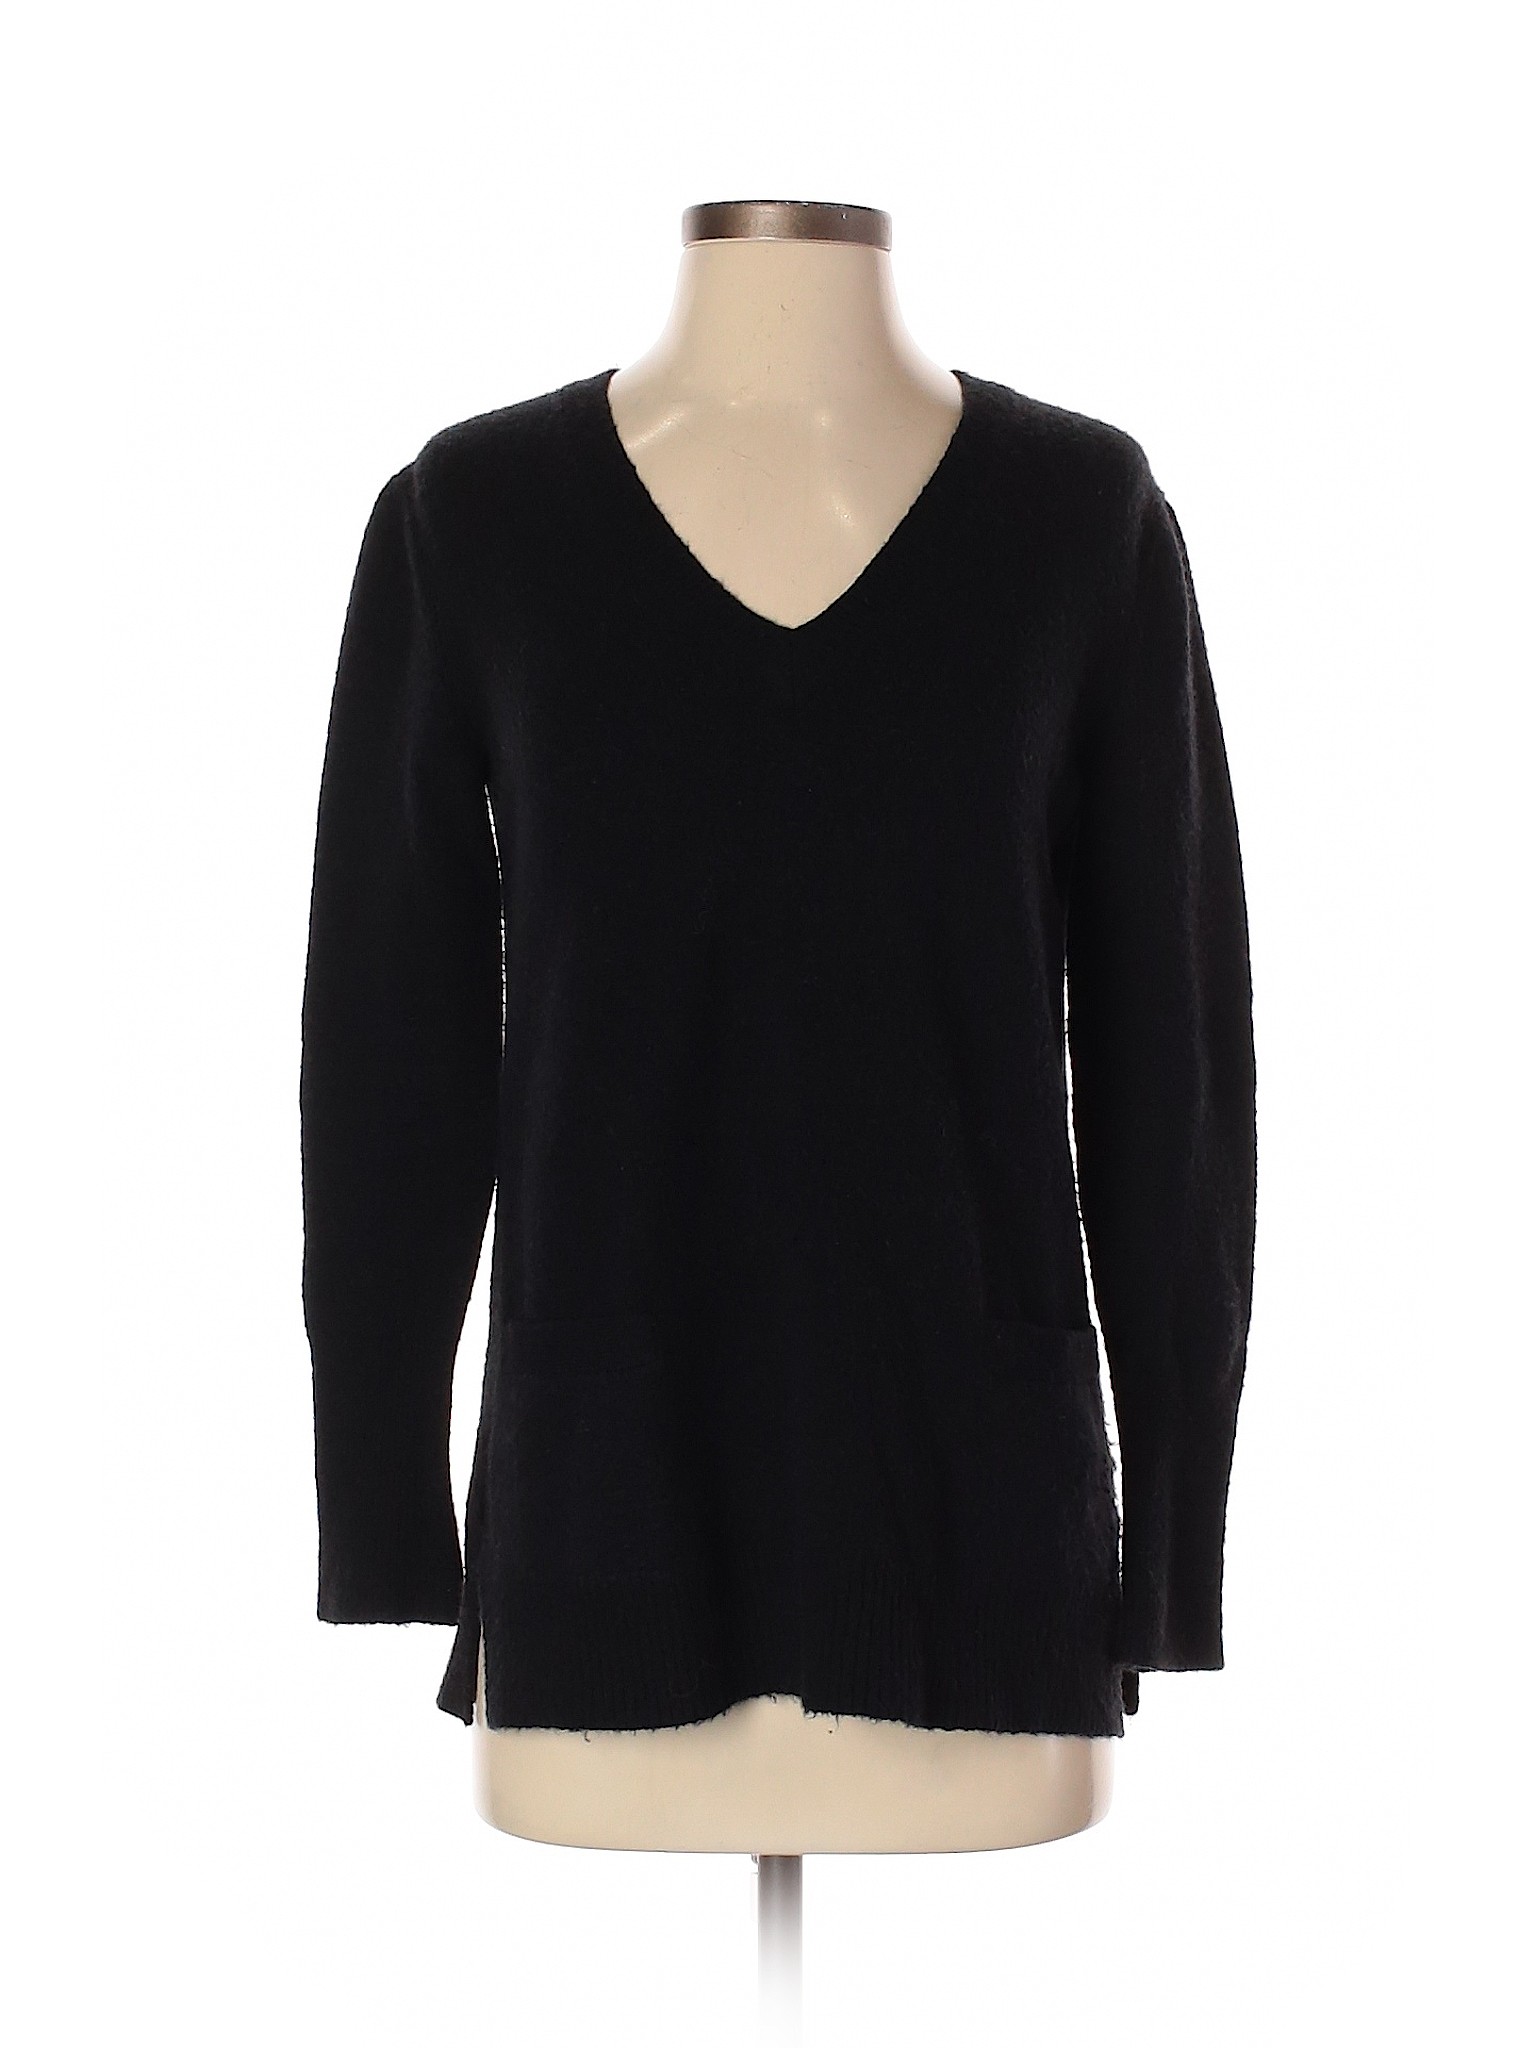 J.Crew Women Black Pullover Sweater XS | eBay